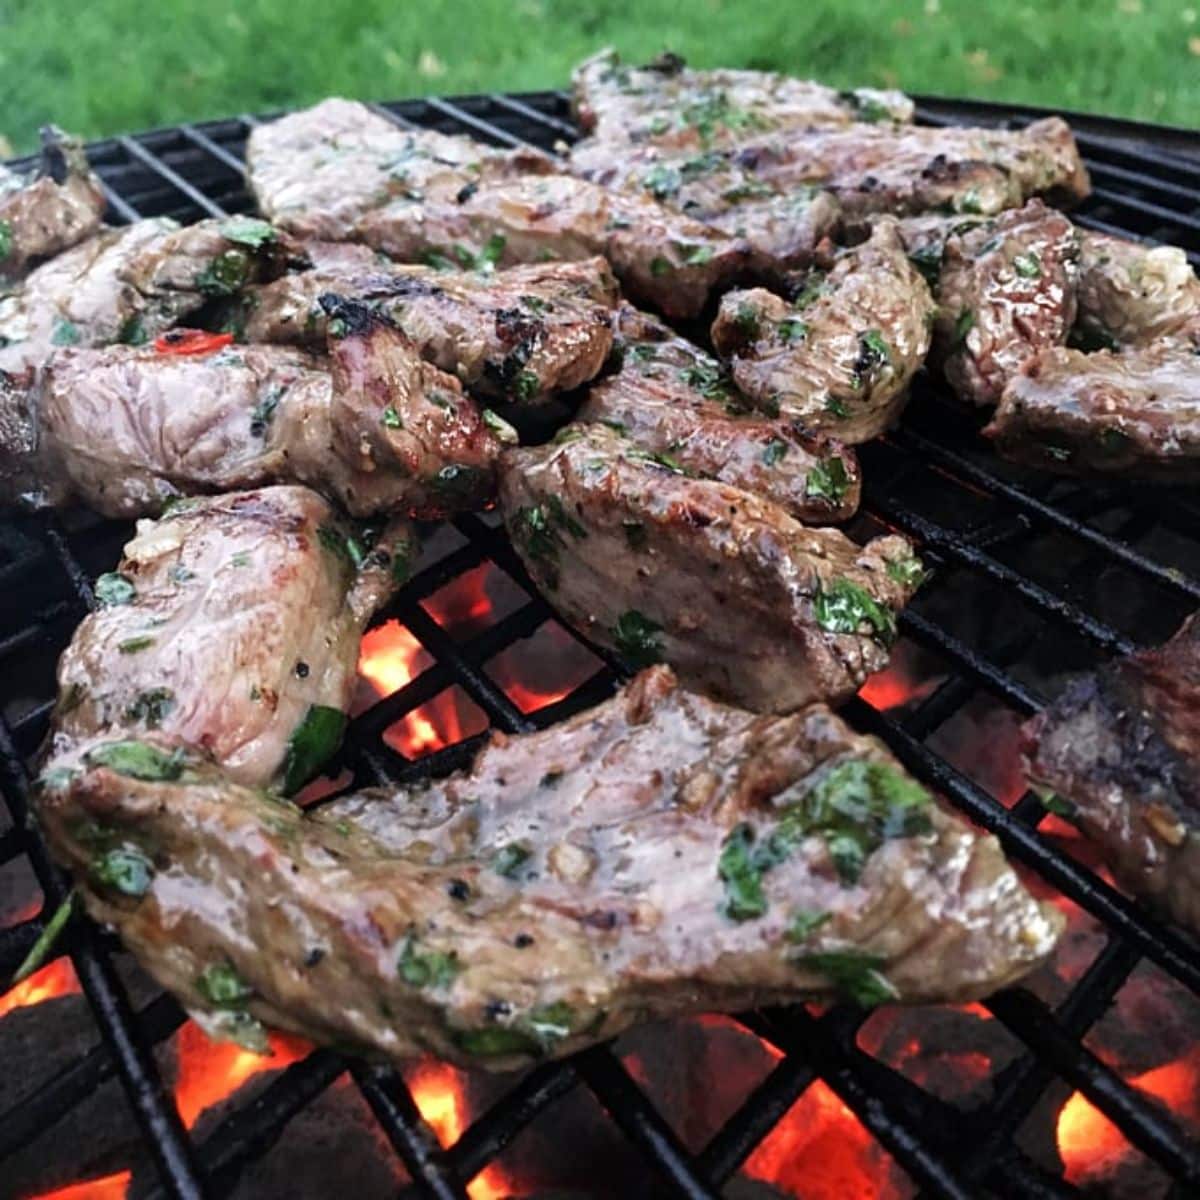 Juicy chimichurri elk steaks on a grill.